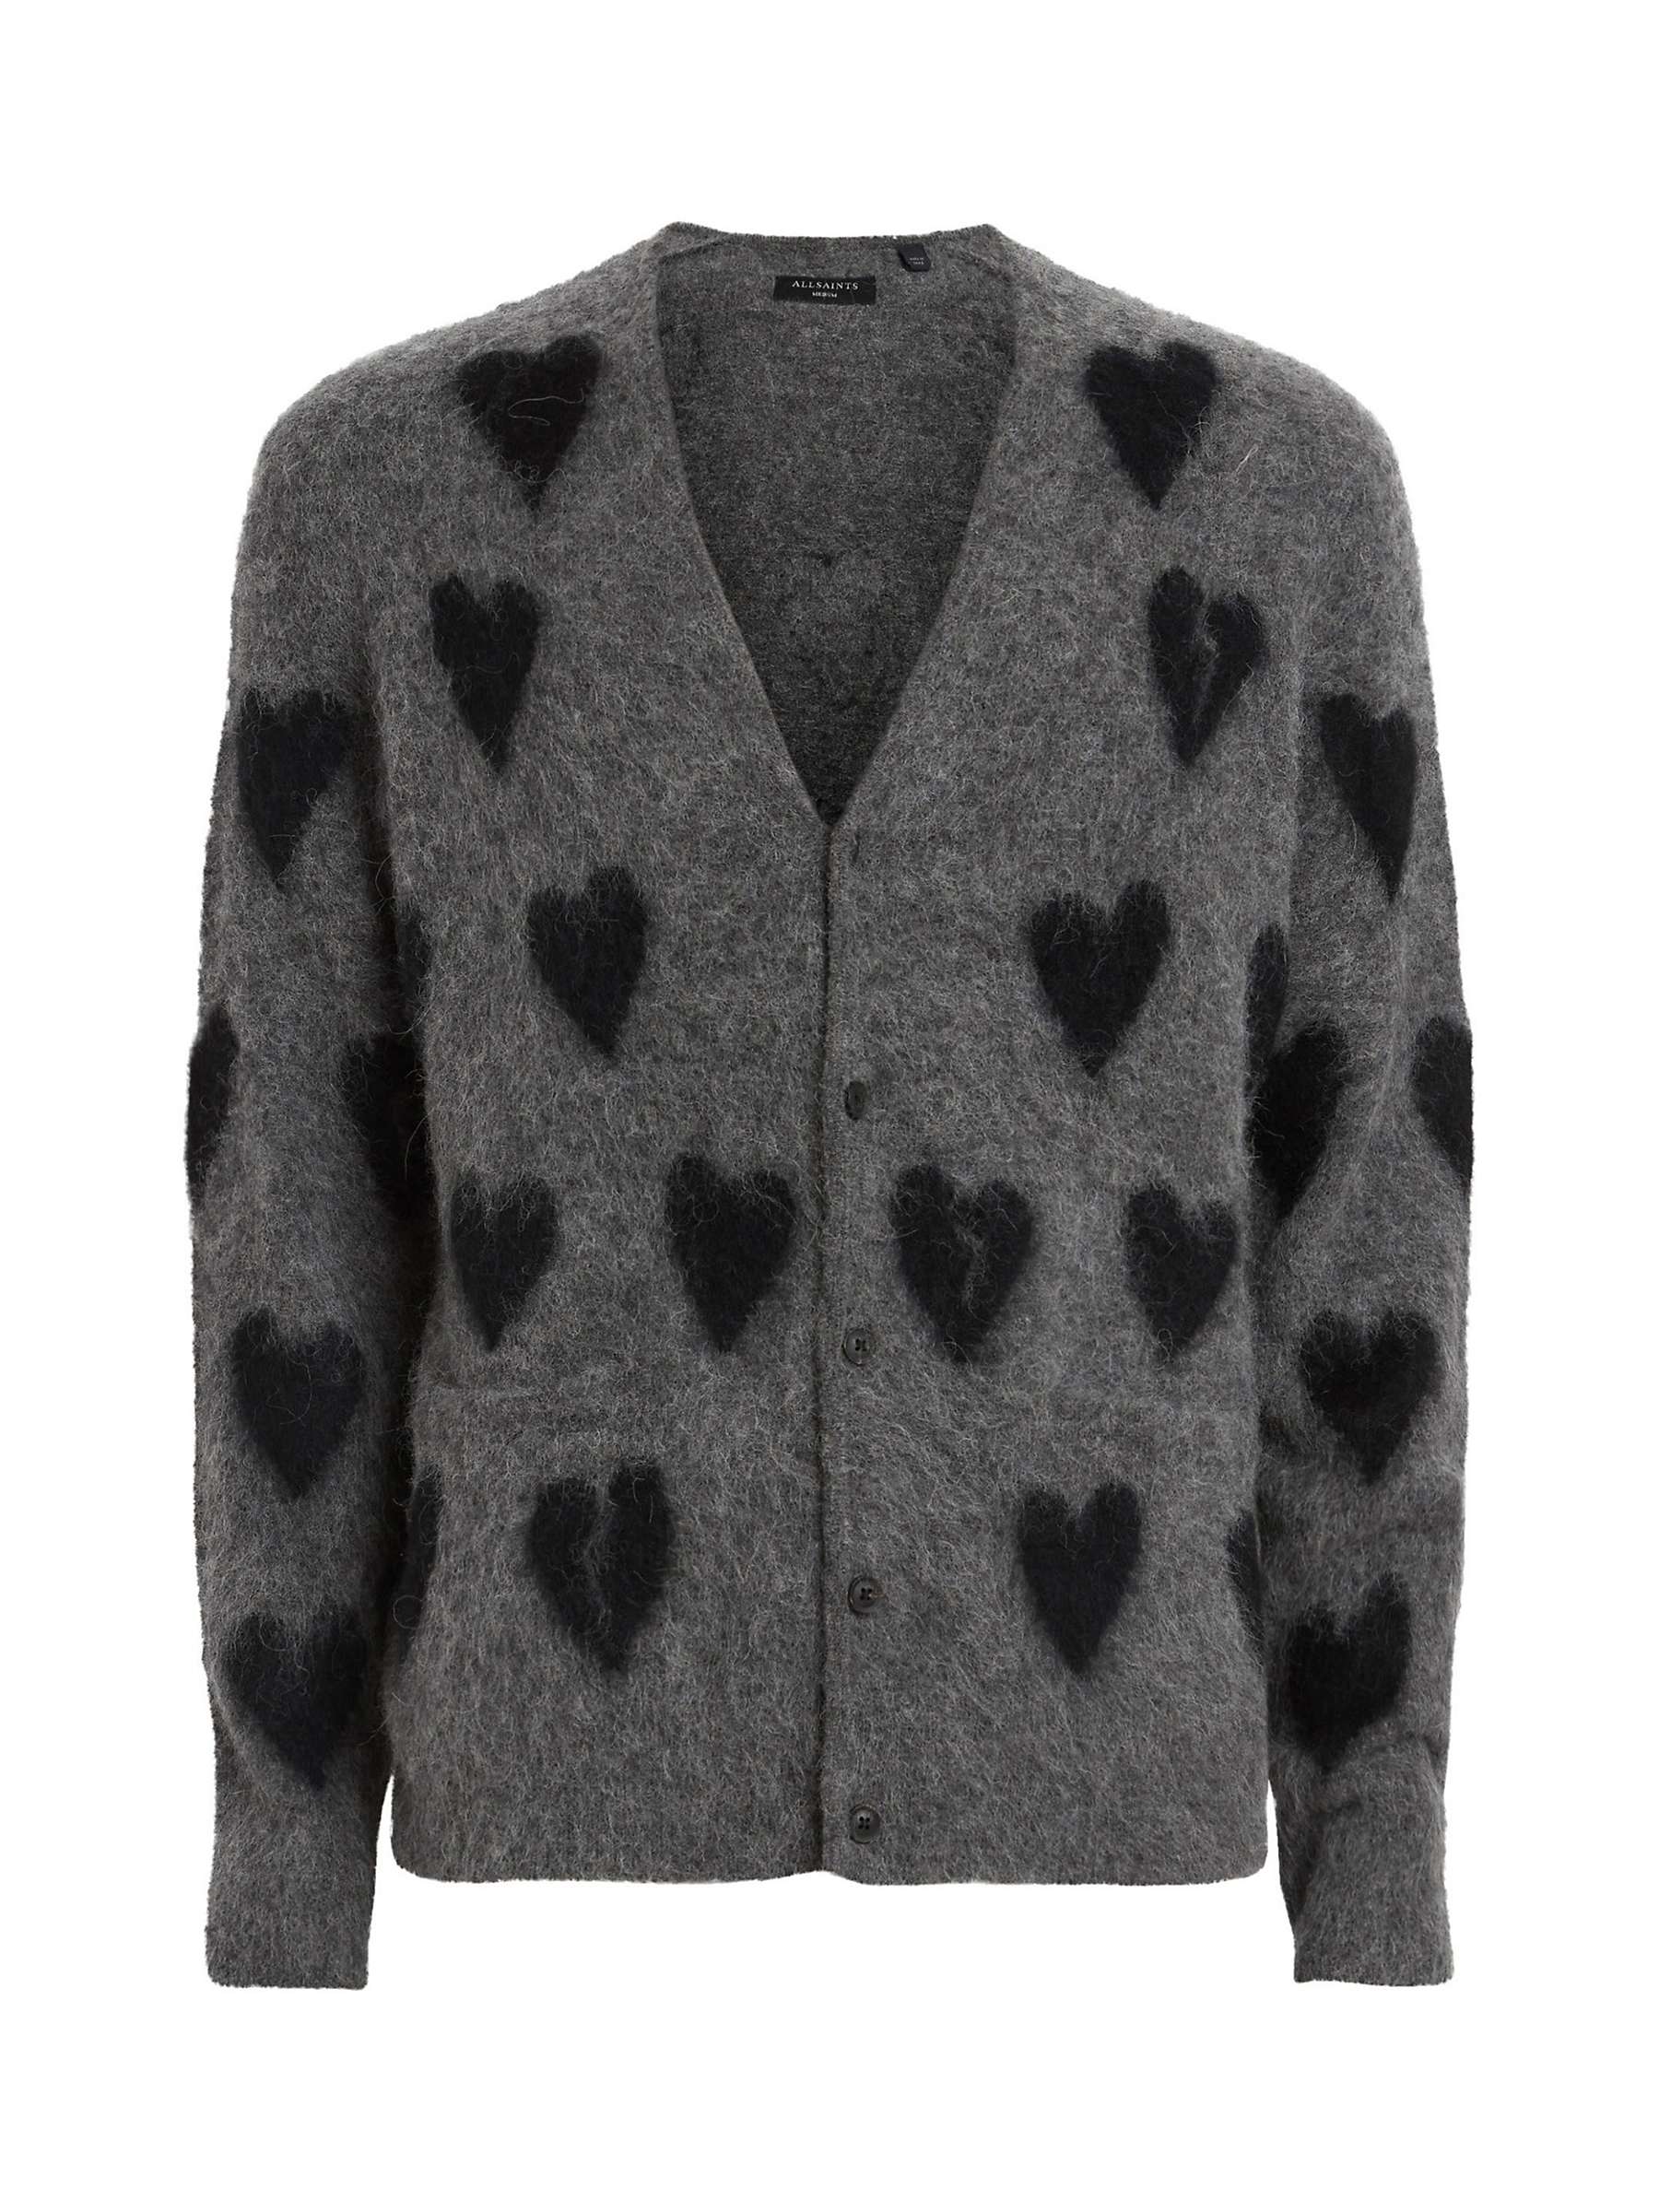 Buy AllSaints Amore Wool Blend Cardigan, Grey/Black Online at johnlewis.com